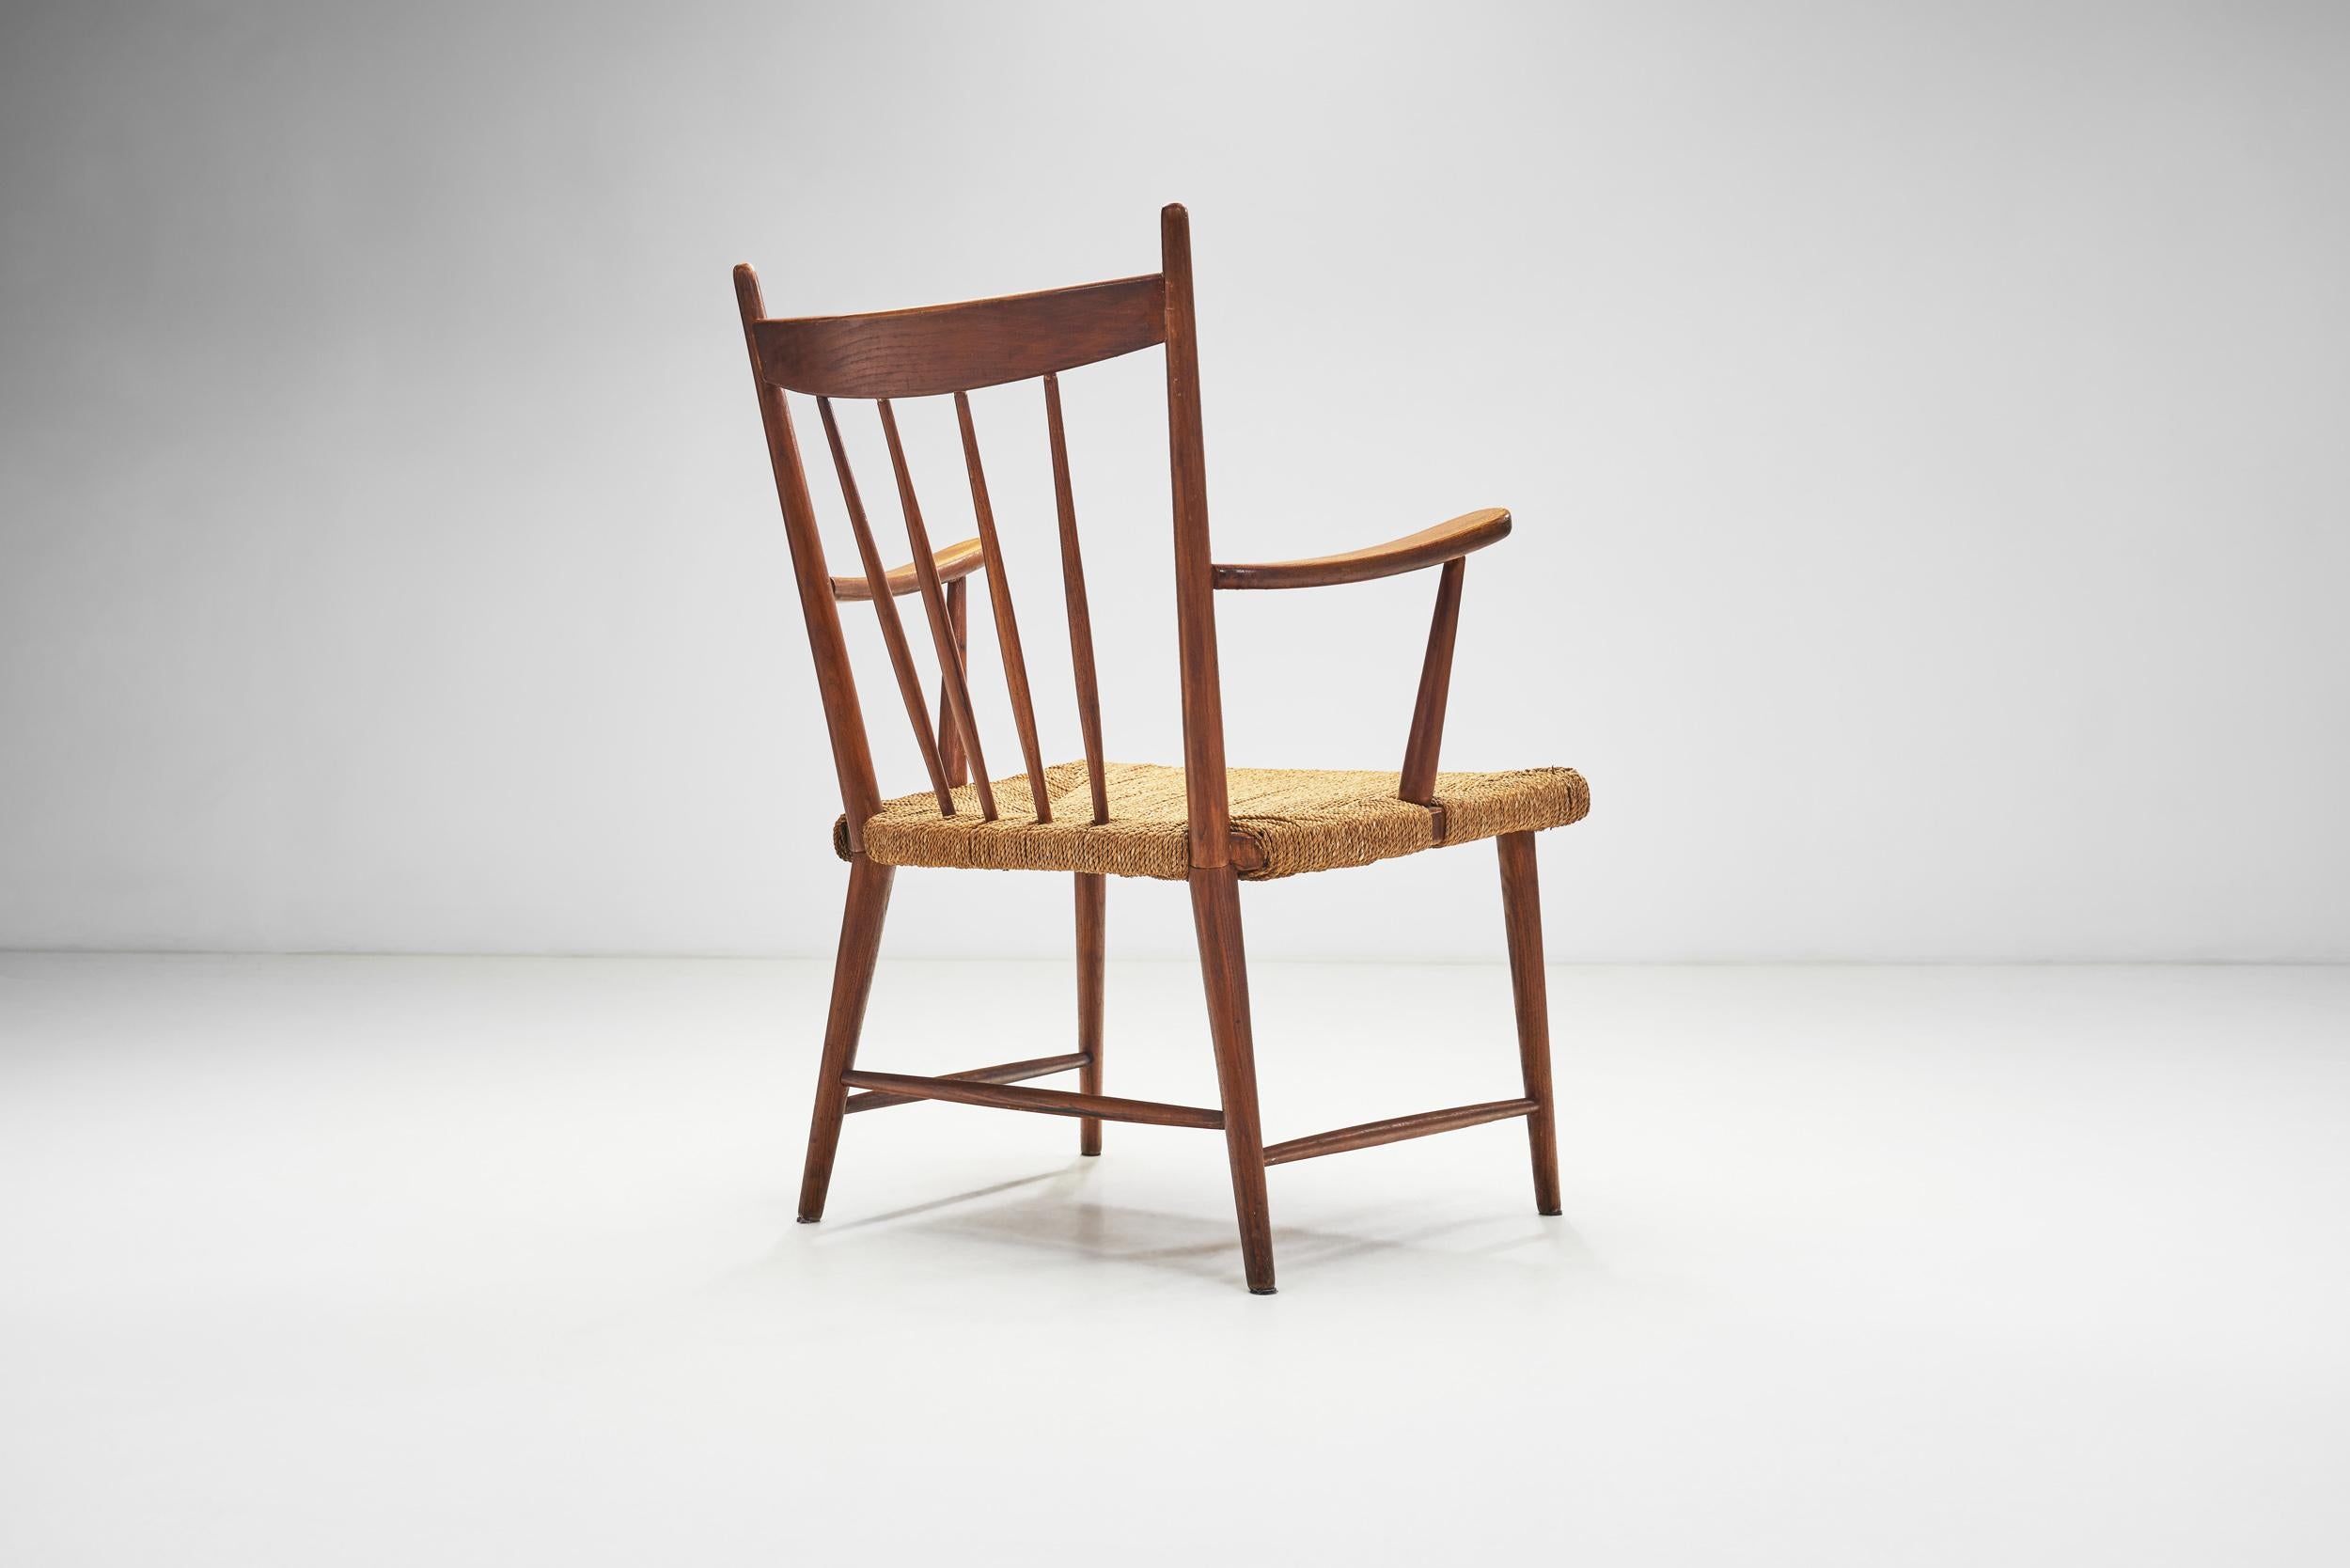 Teak Slatback Chair with Woven Danish Cord Seat, Denmark ca 1960s For Sale 1